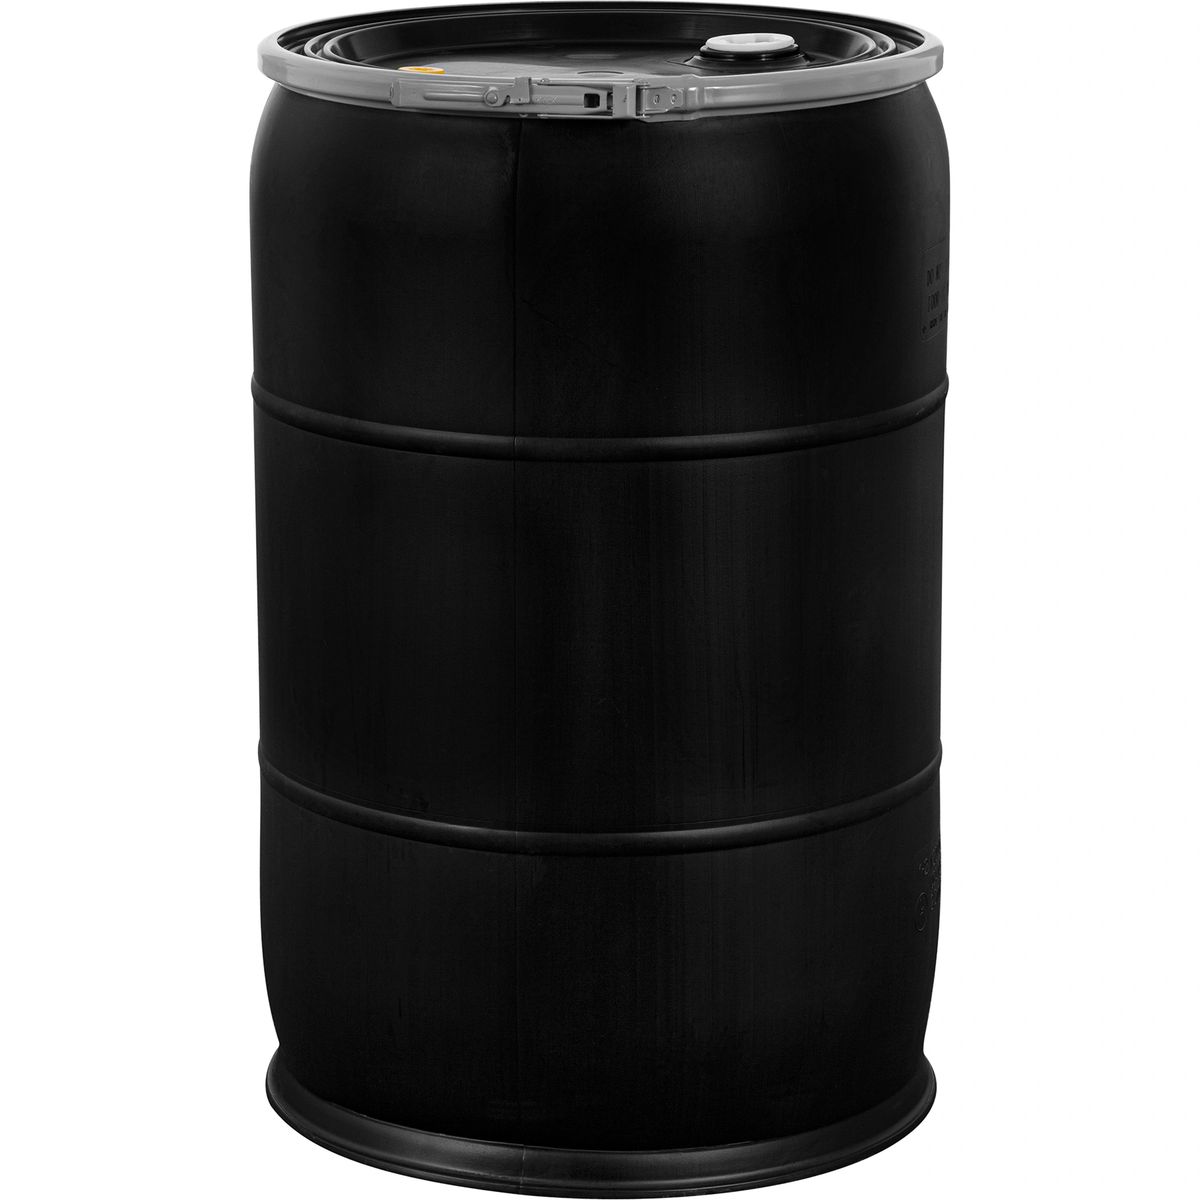 55 Gallon Plastic Barrel Open Top + Locking Lid Black - Used Previous  Non-Food Grade, Contained